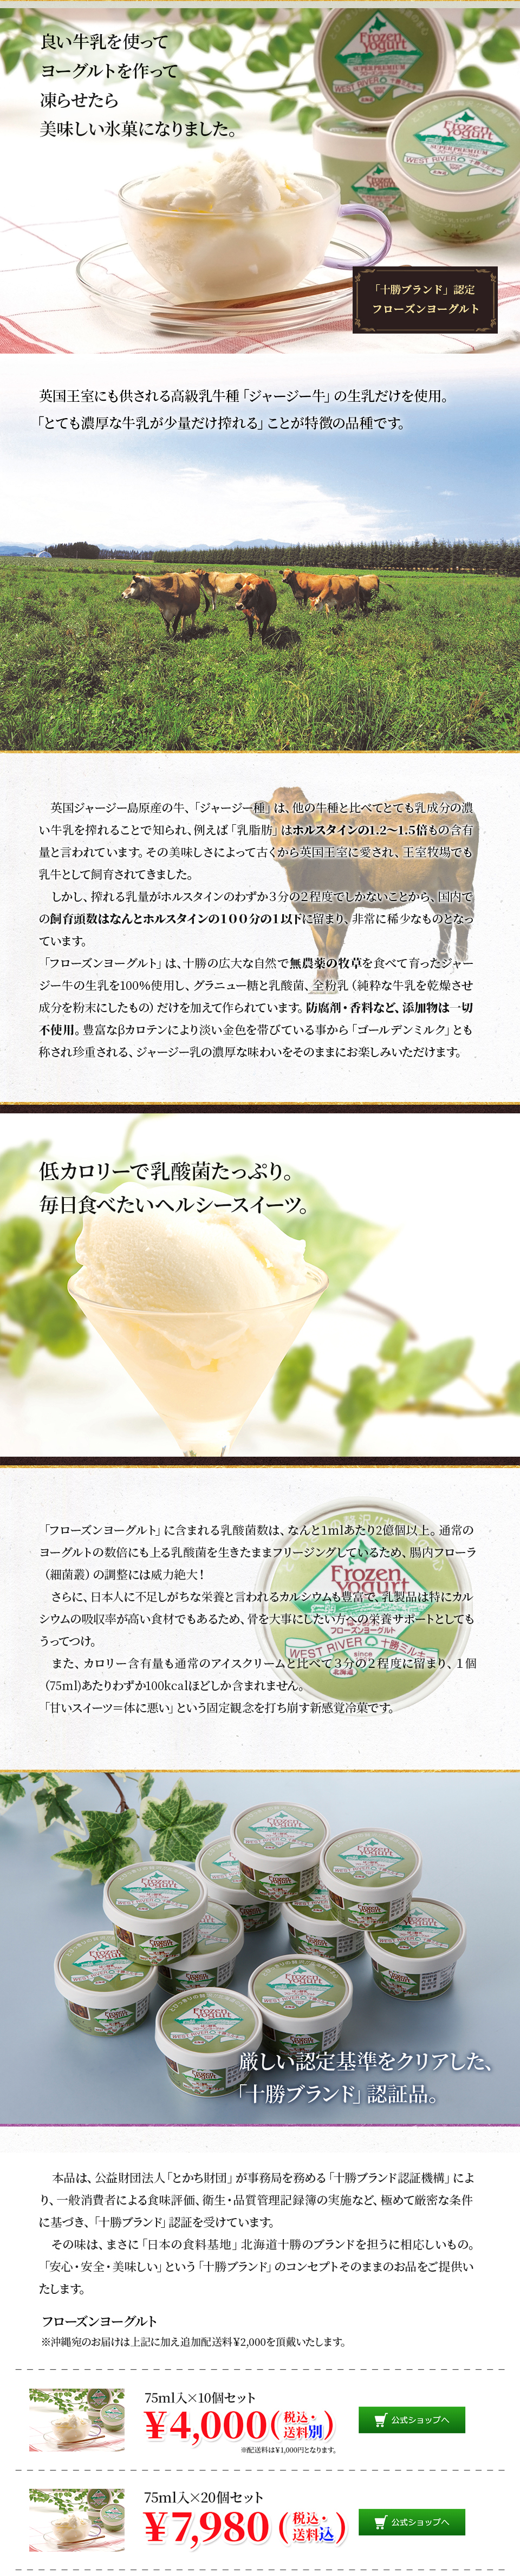 frozen-yogurt-content フローズンヨーグルト 特設販売ページ